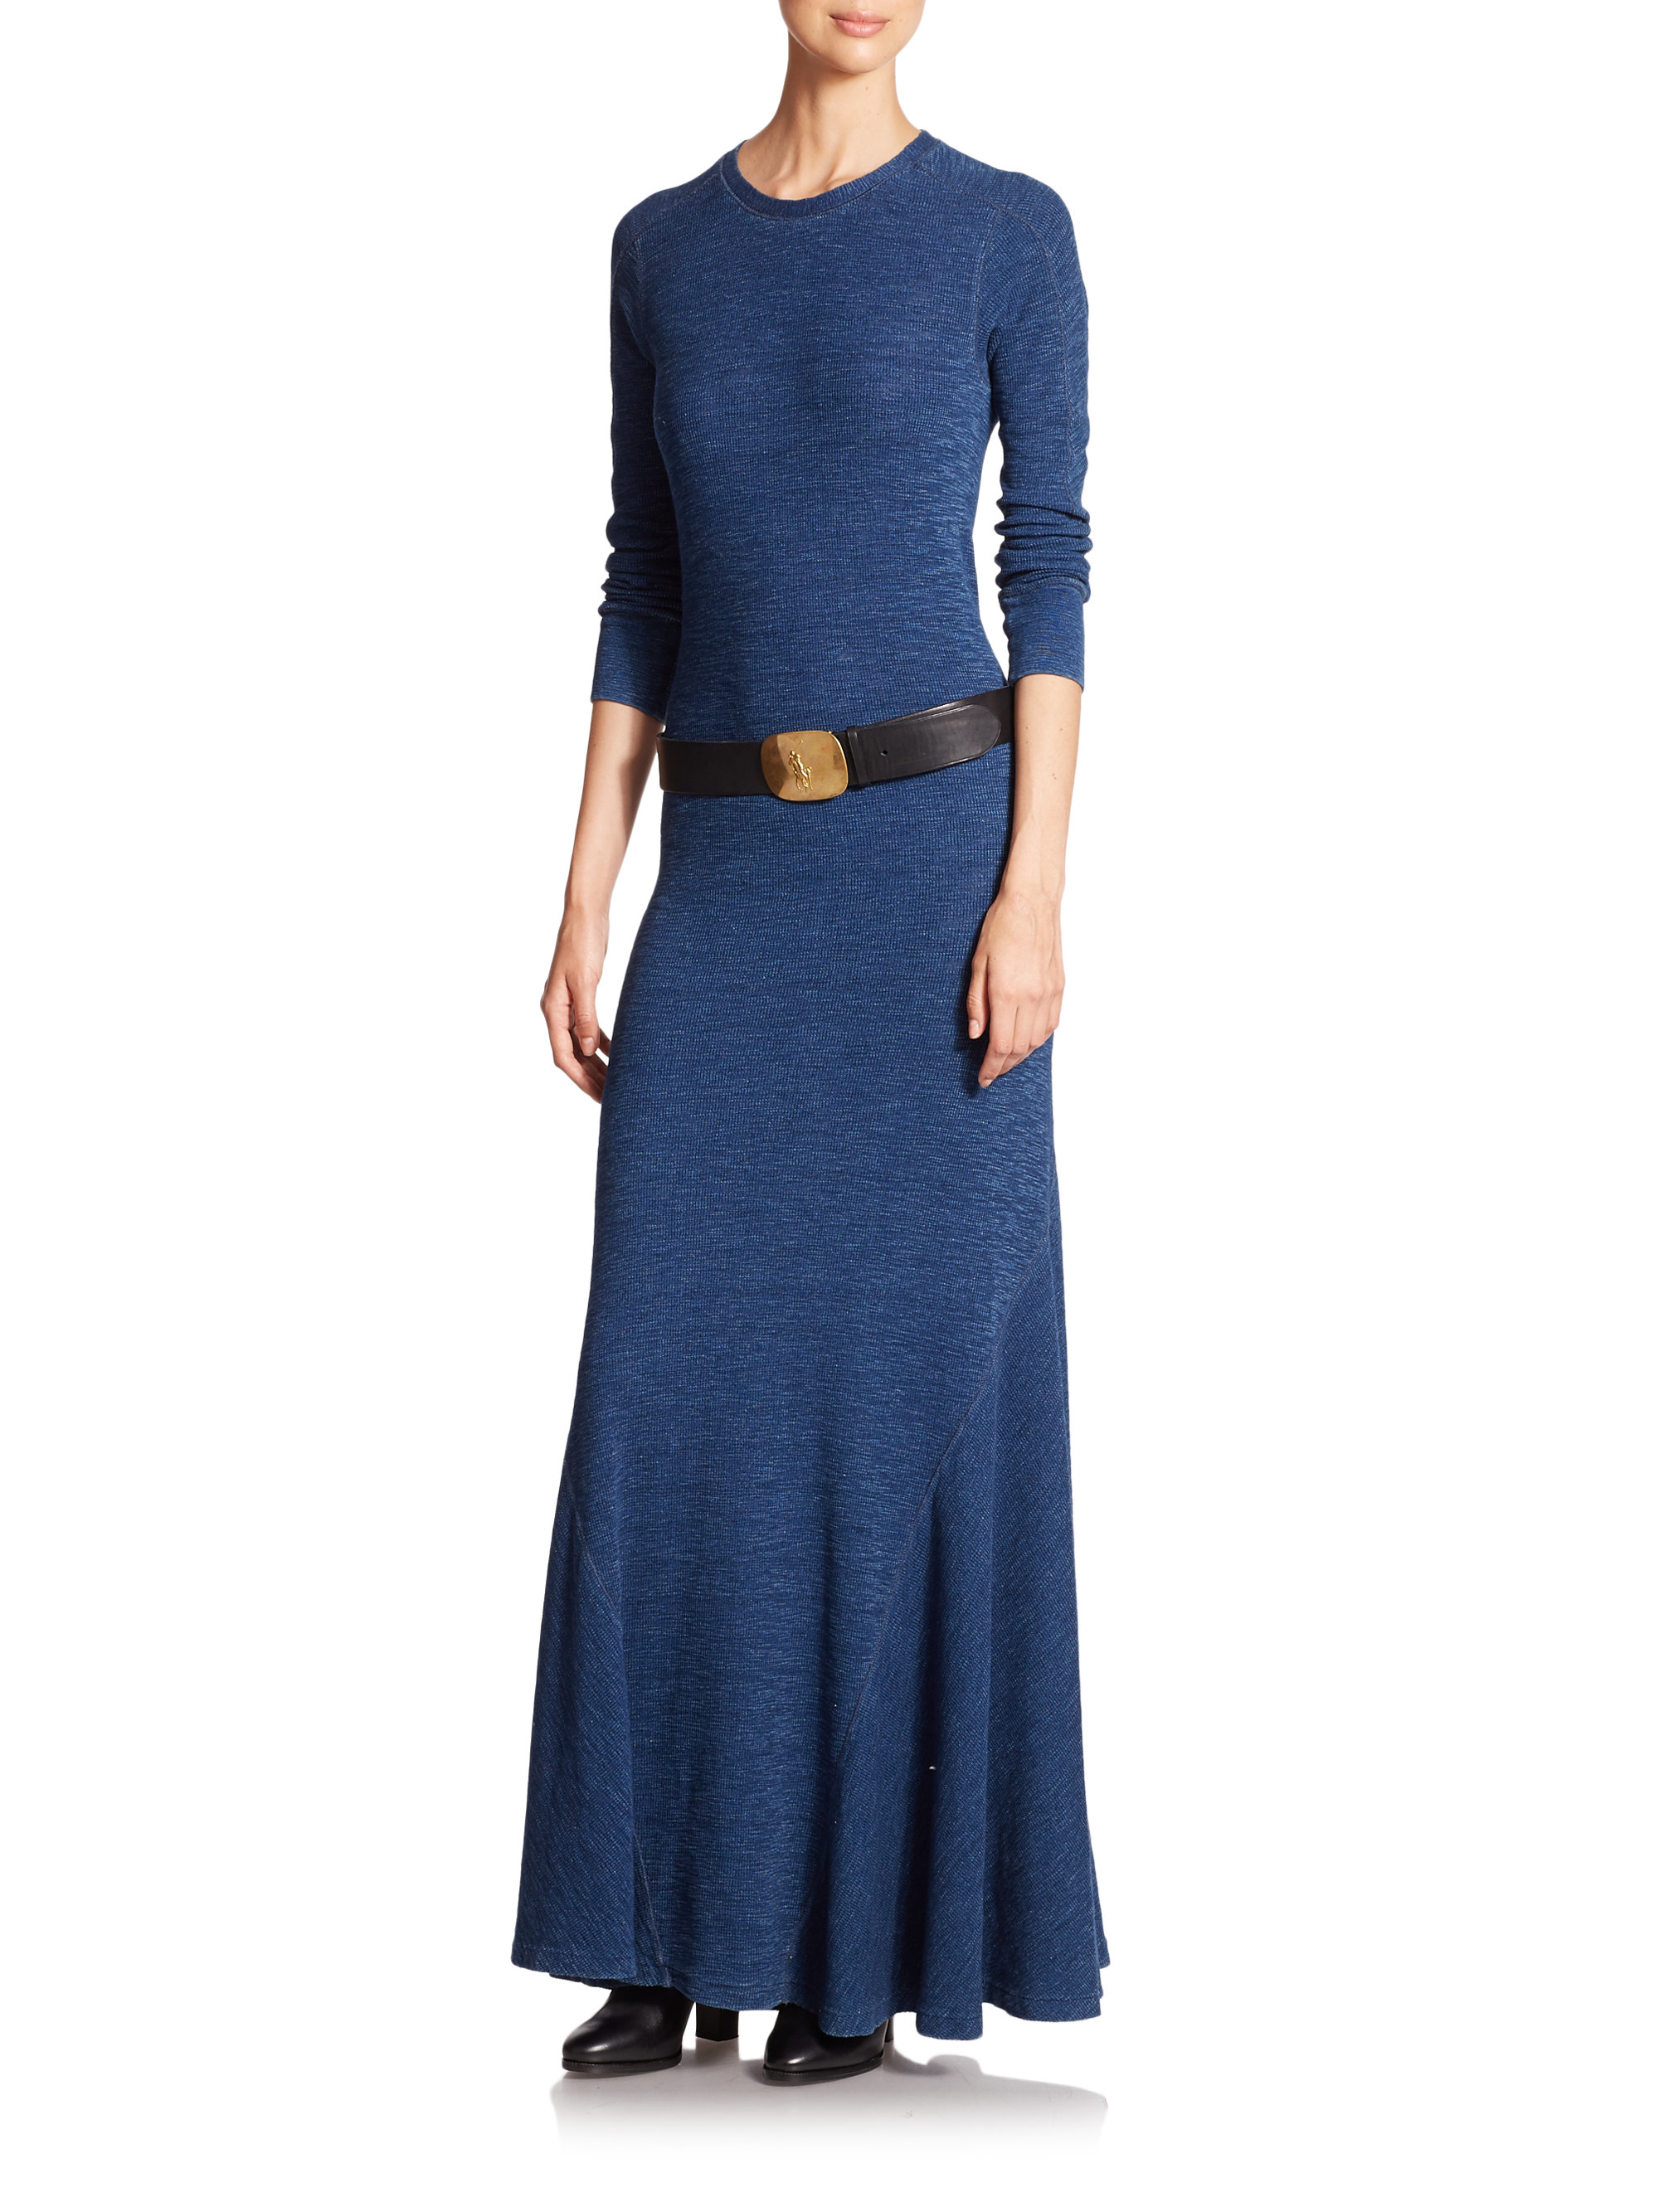 Polo Ralph Lauren Cotton Maxi Dress in Indigo (Blue) - Lyst